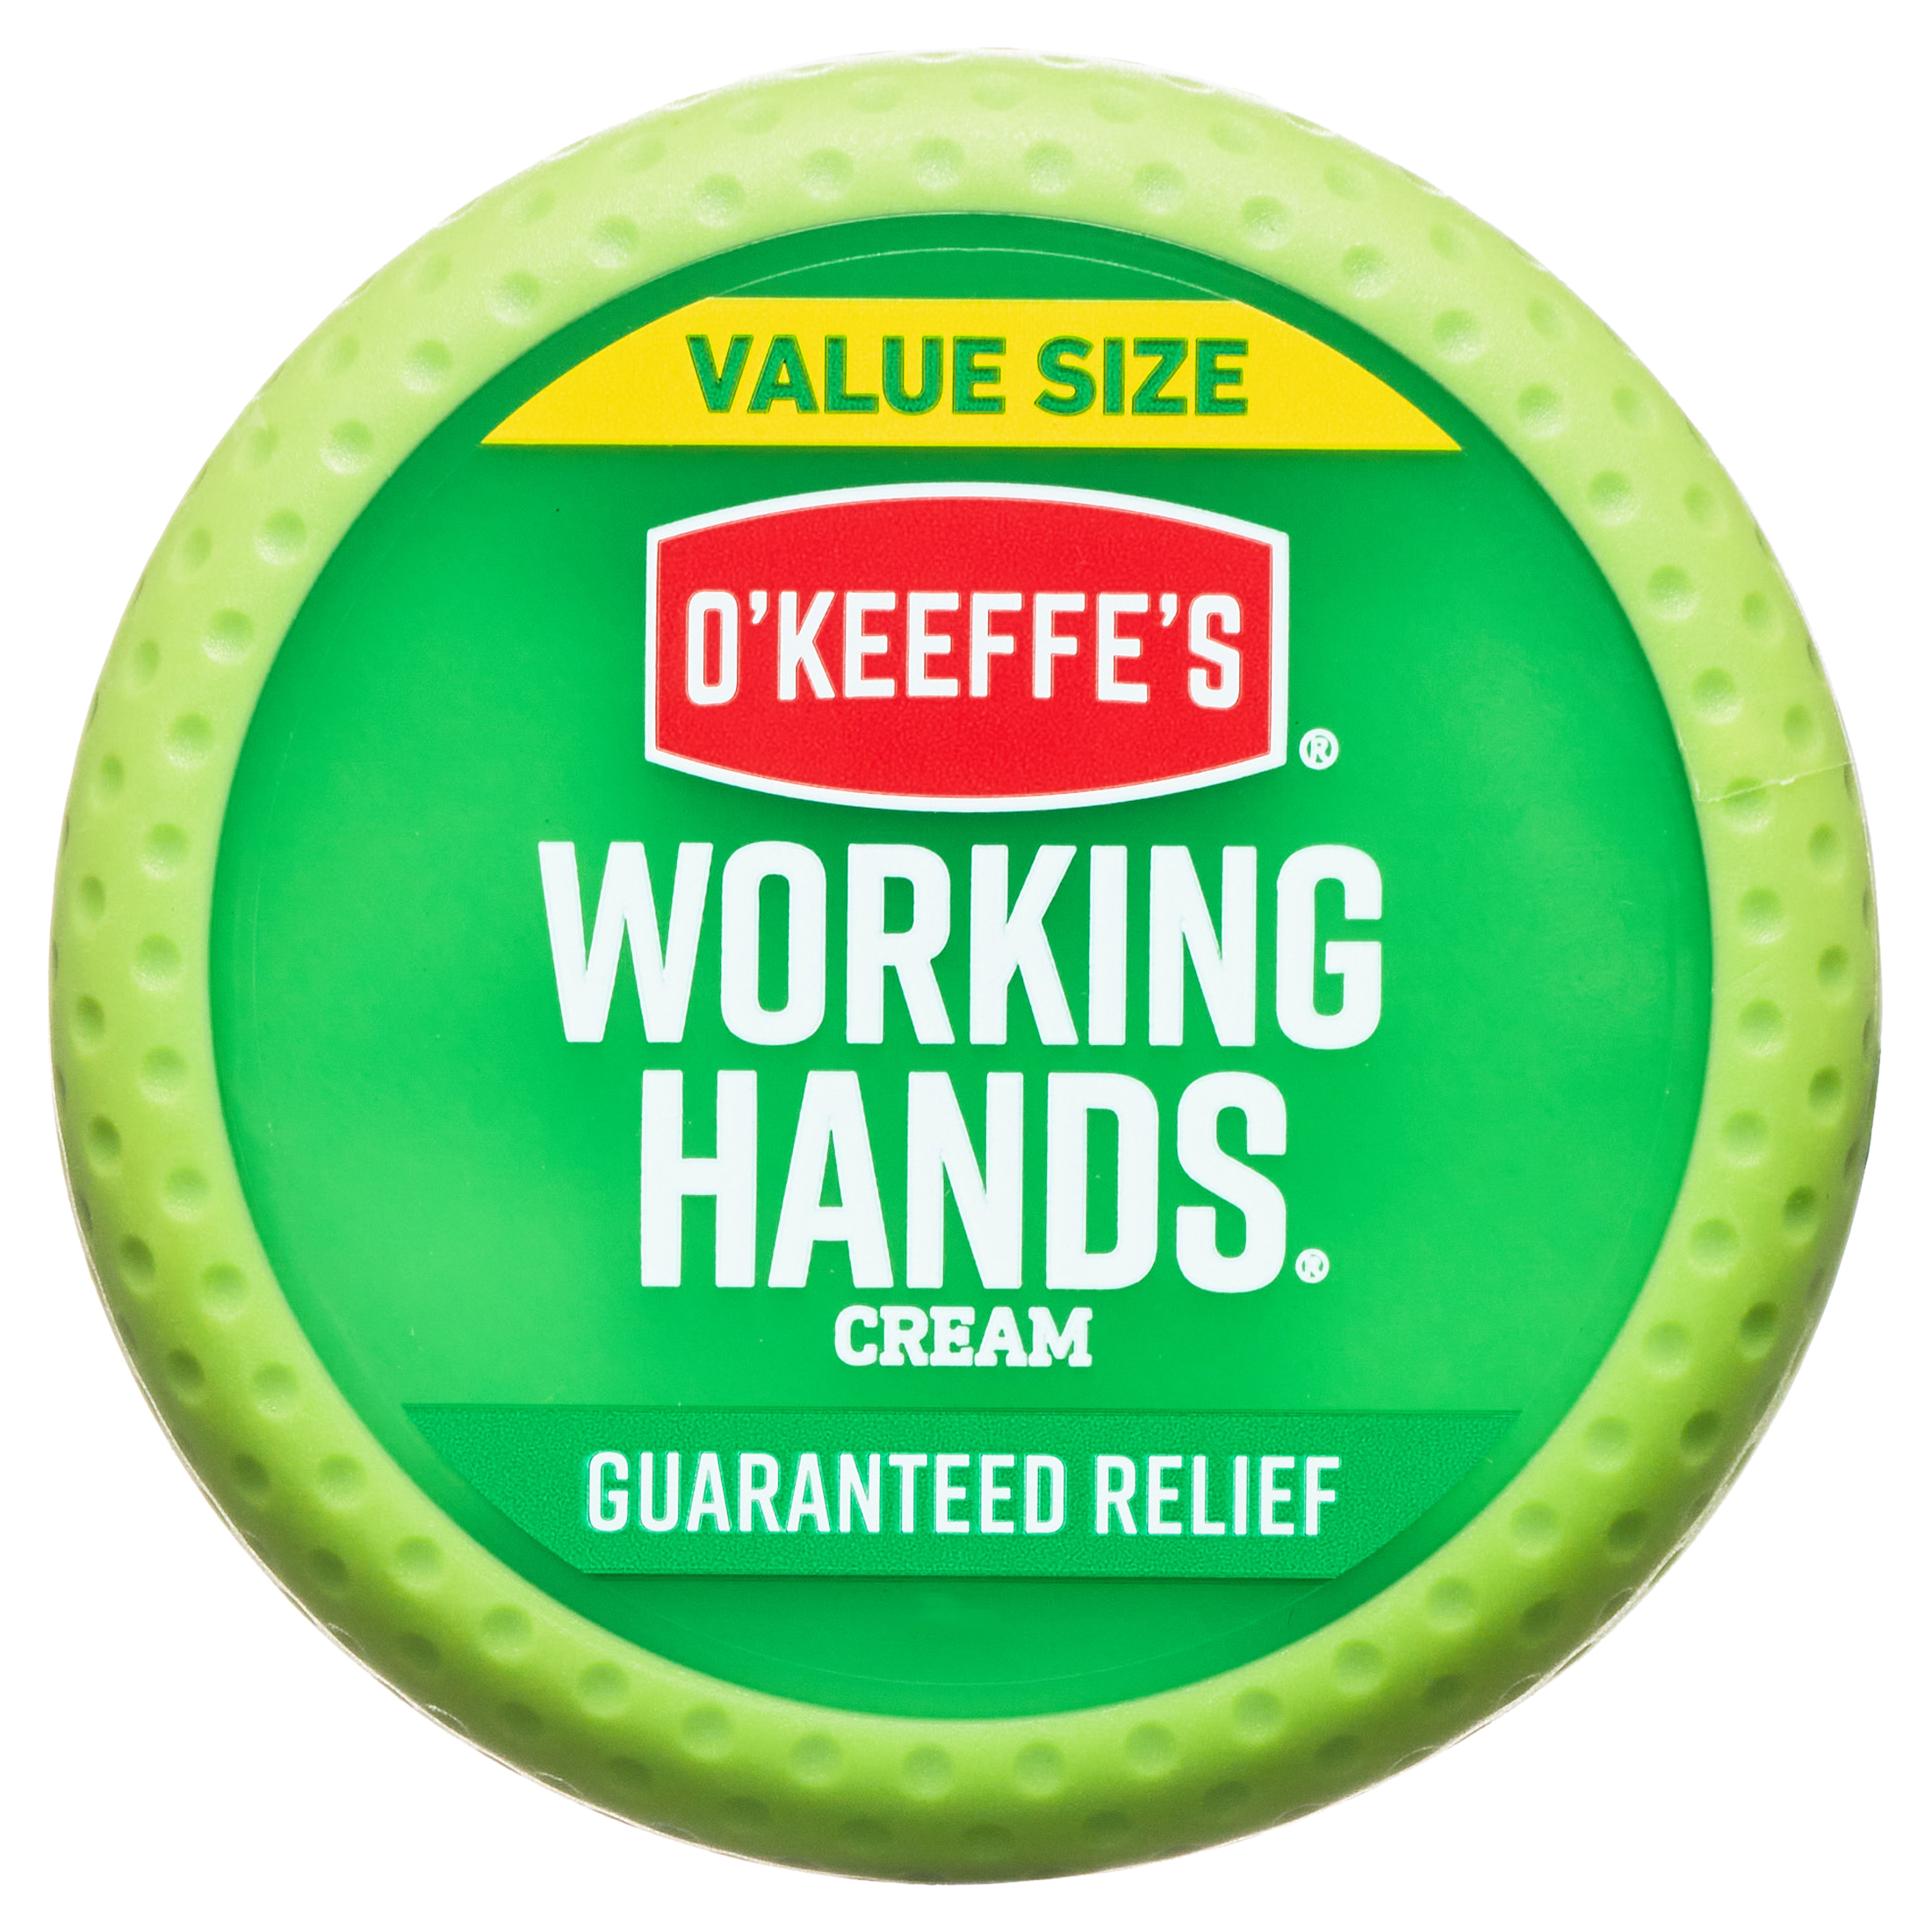 O'Keeffe's Working Hands Hand Cream, 5.4 oz. Jar - image 3 of 7